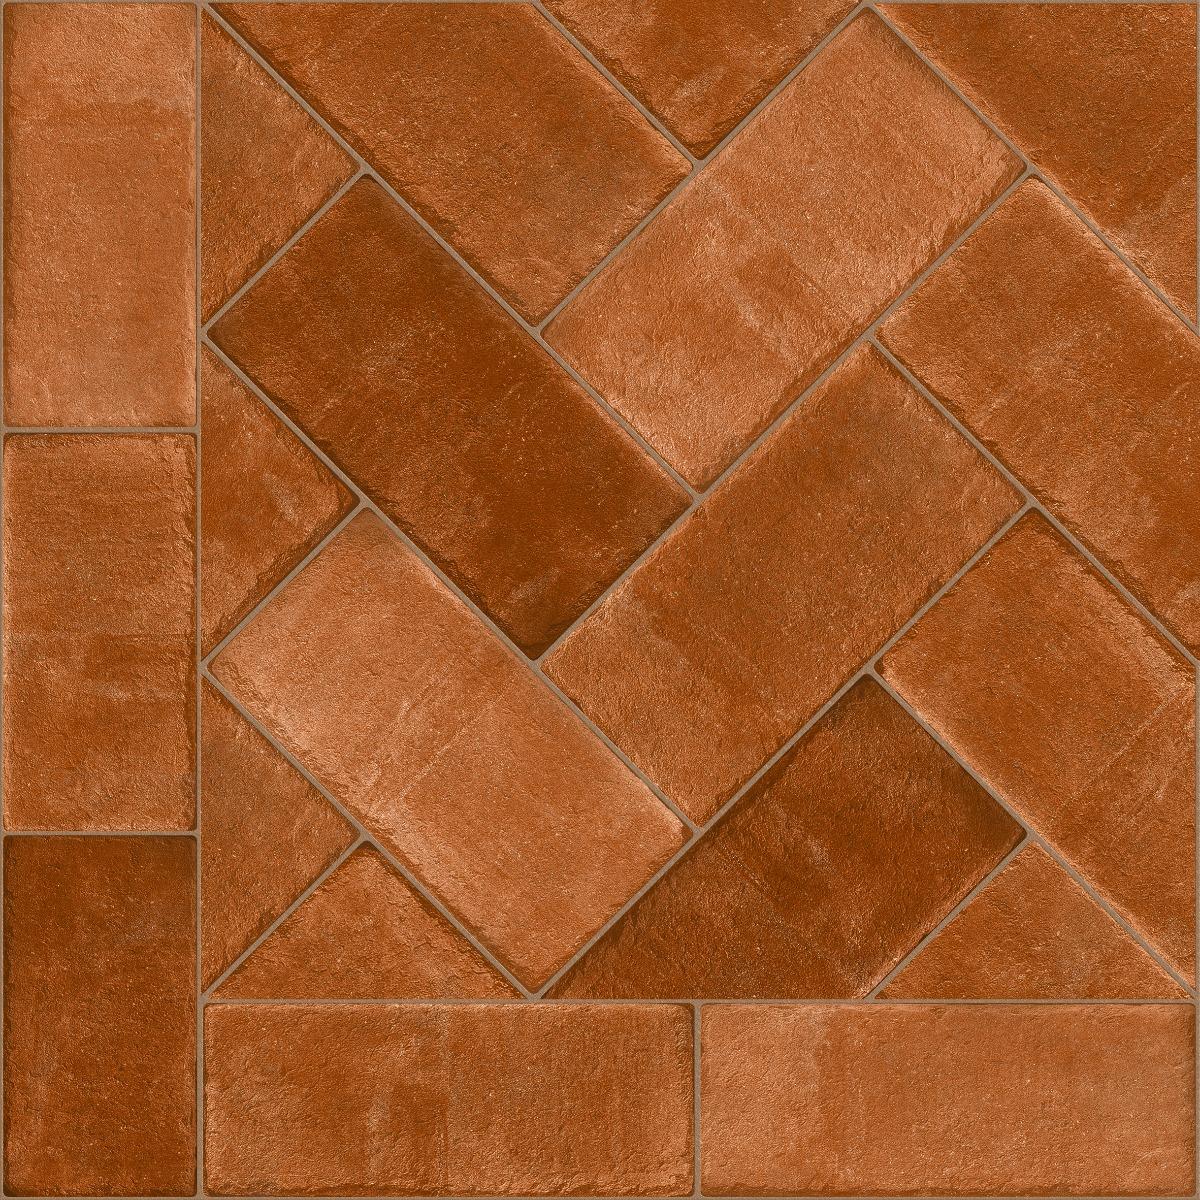 2x2 Tiles for Bathroom Tiles, Living Room Tiles, Bedroom Tiles, Accent Tiles, Hospital Tiles, Bar/Restaurant, Commercial/Office, Outdoor Area